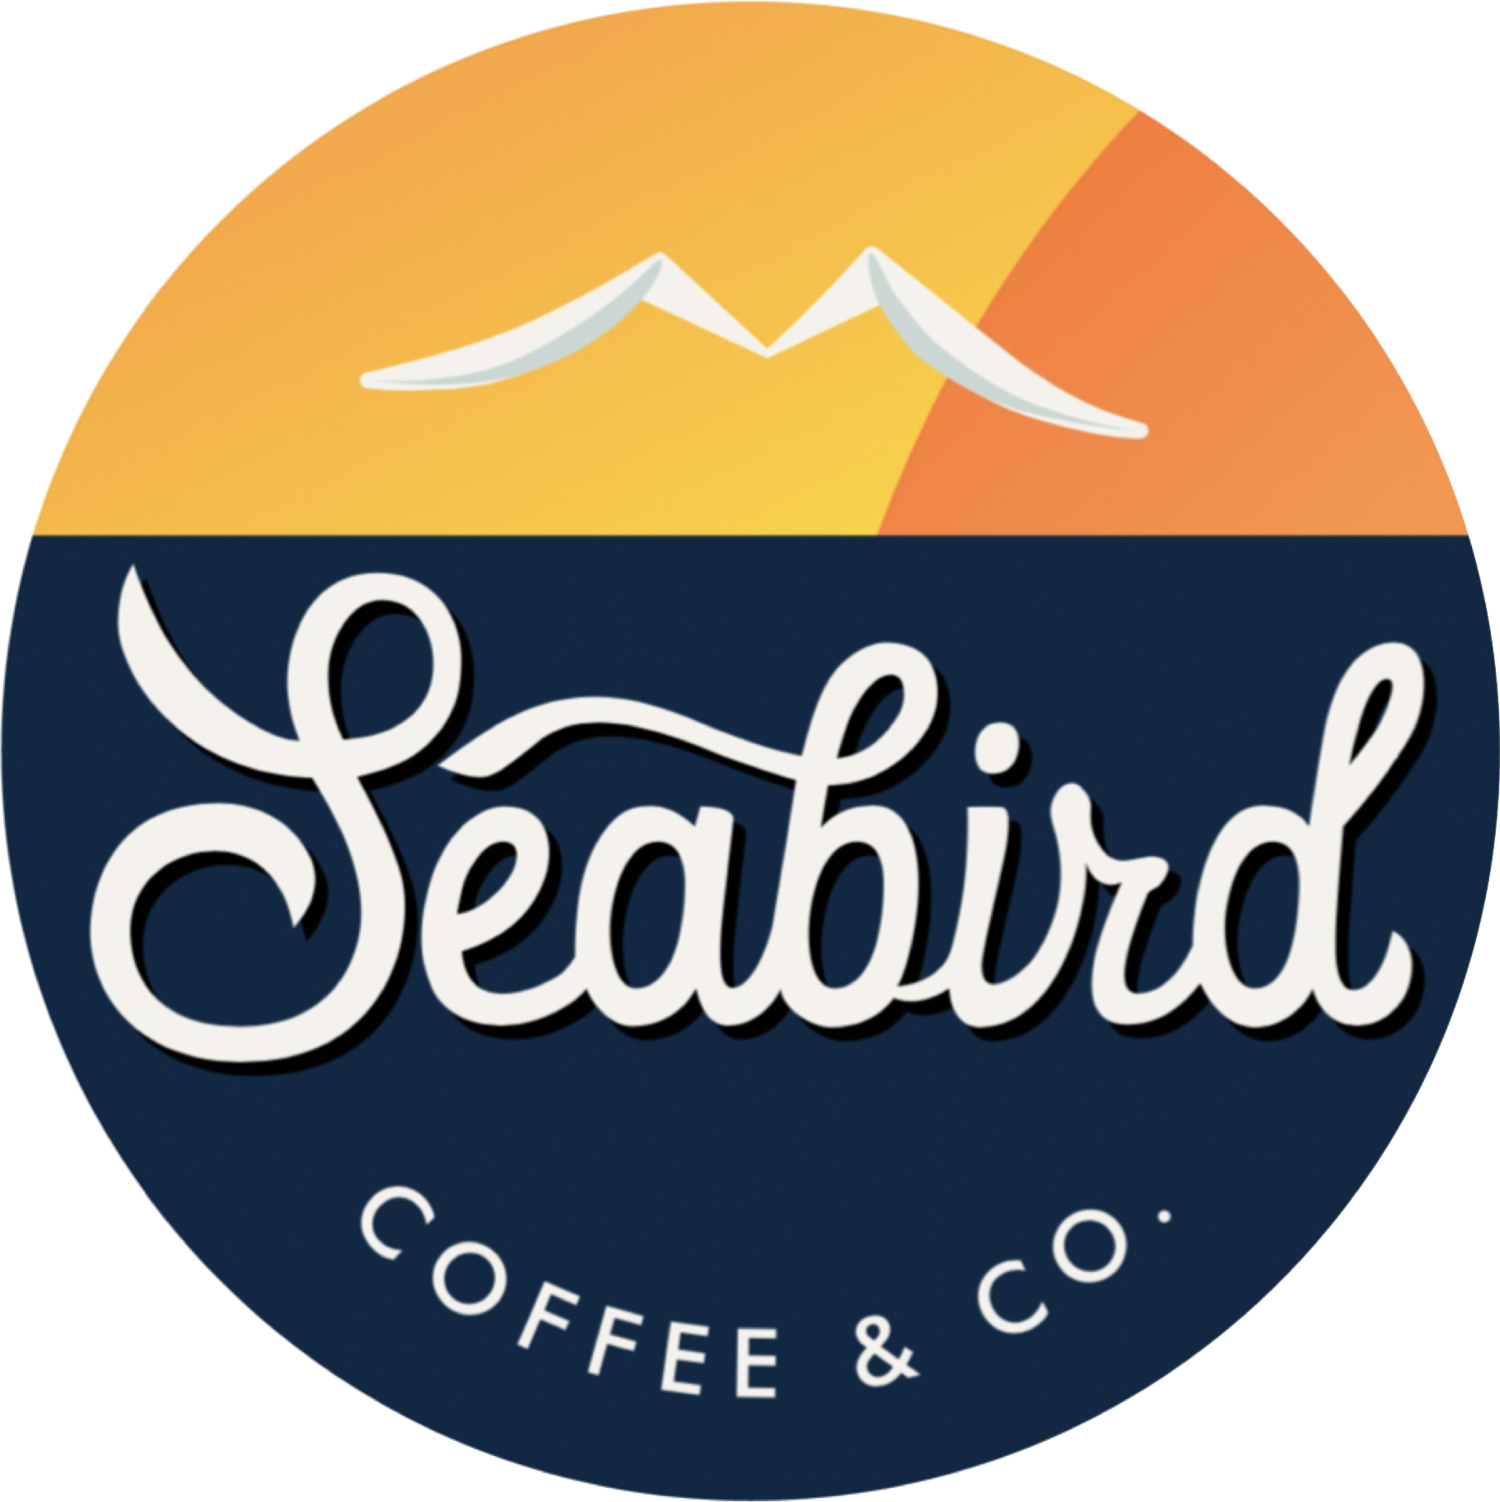 Seabird Coffee logo